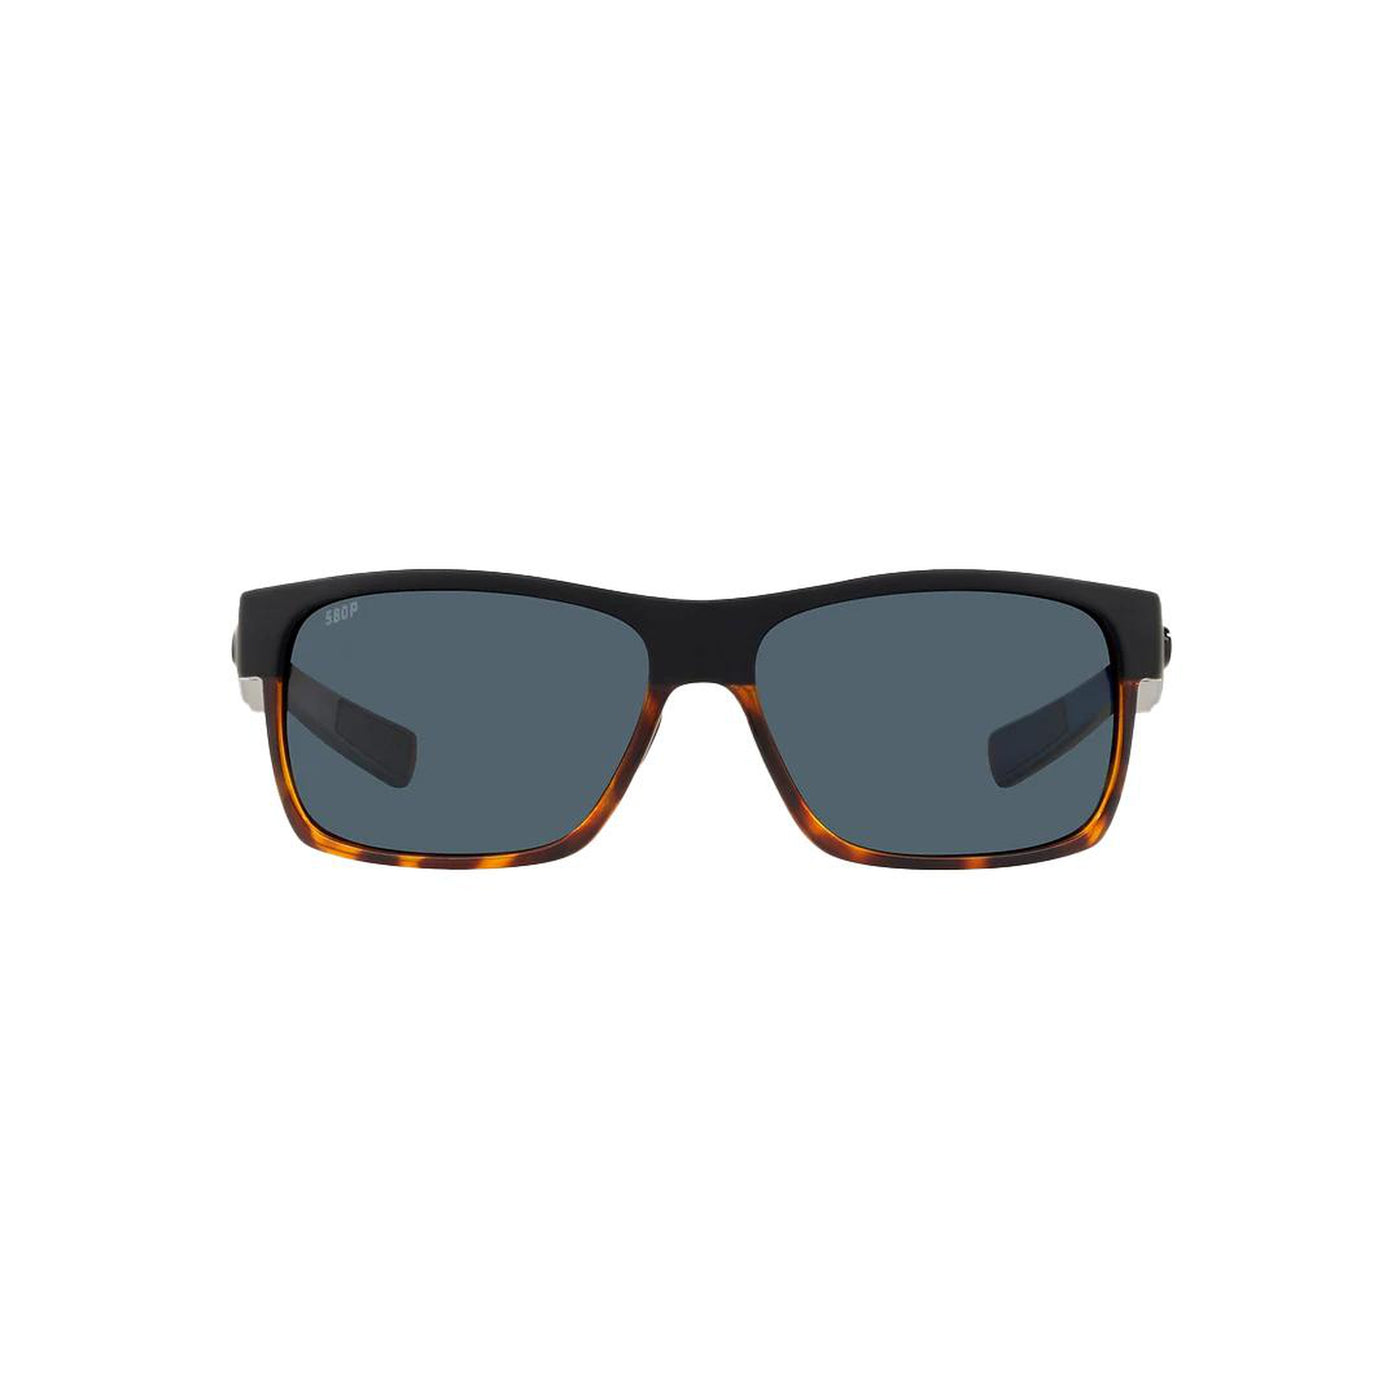 Costa Half Moon-Sunglasses-Topline Eyewear